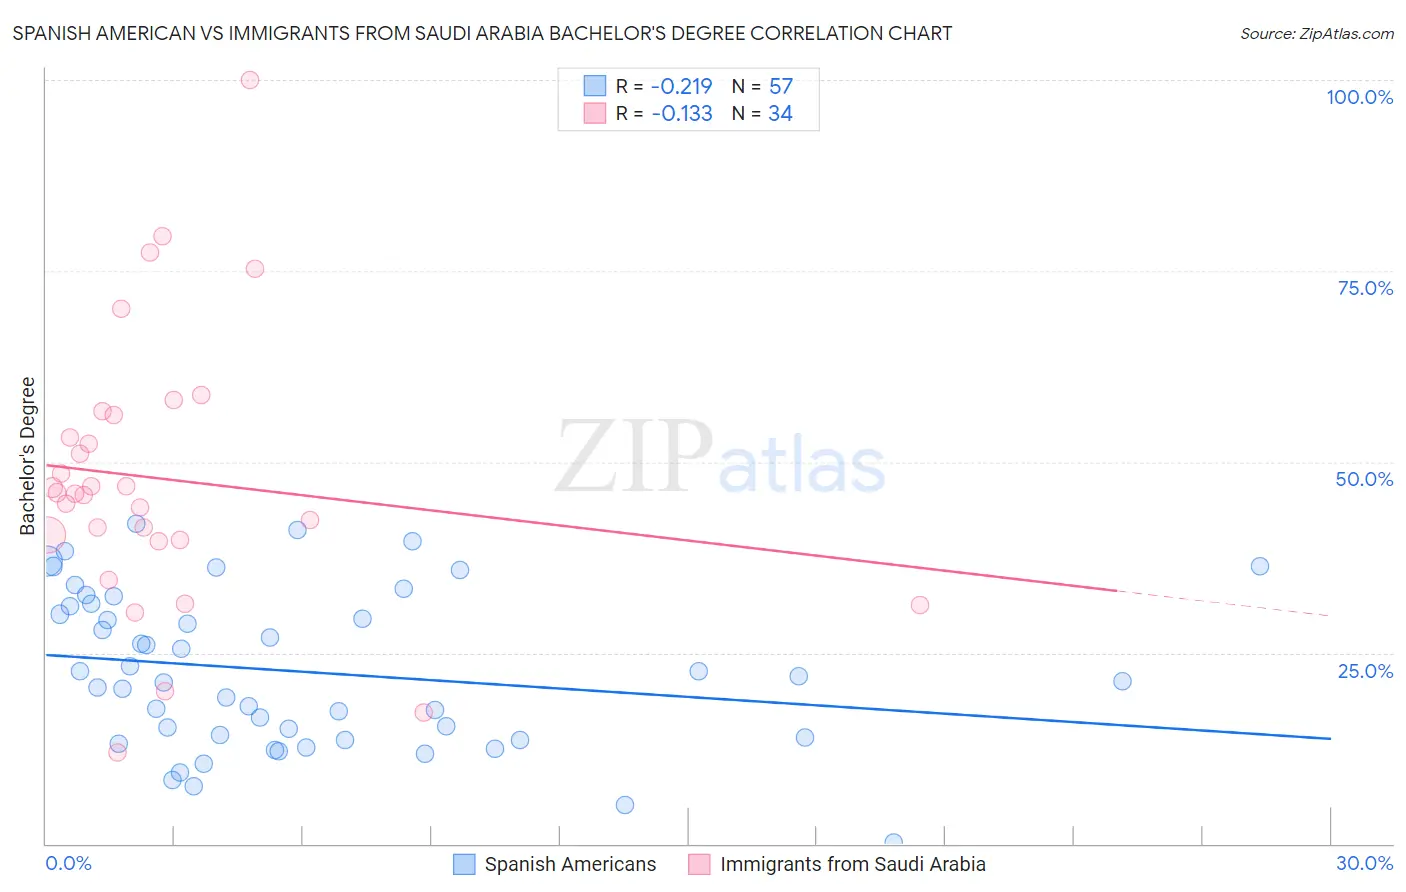 Spanish American vs Immigrants from Saudi Arabia Bachelor's Degree